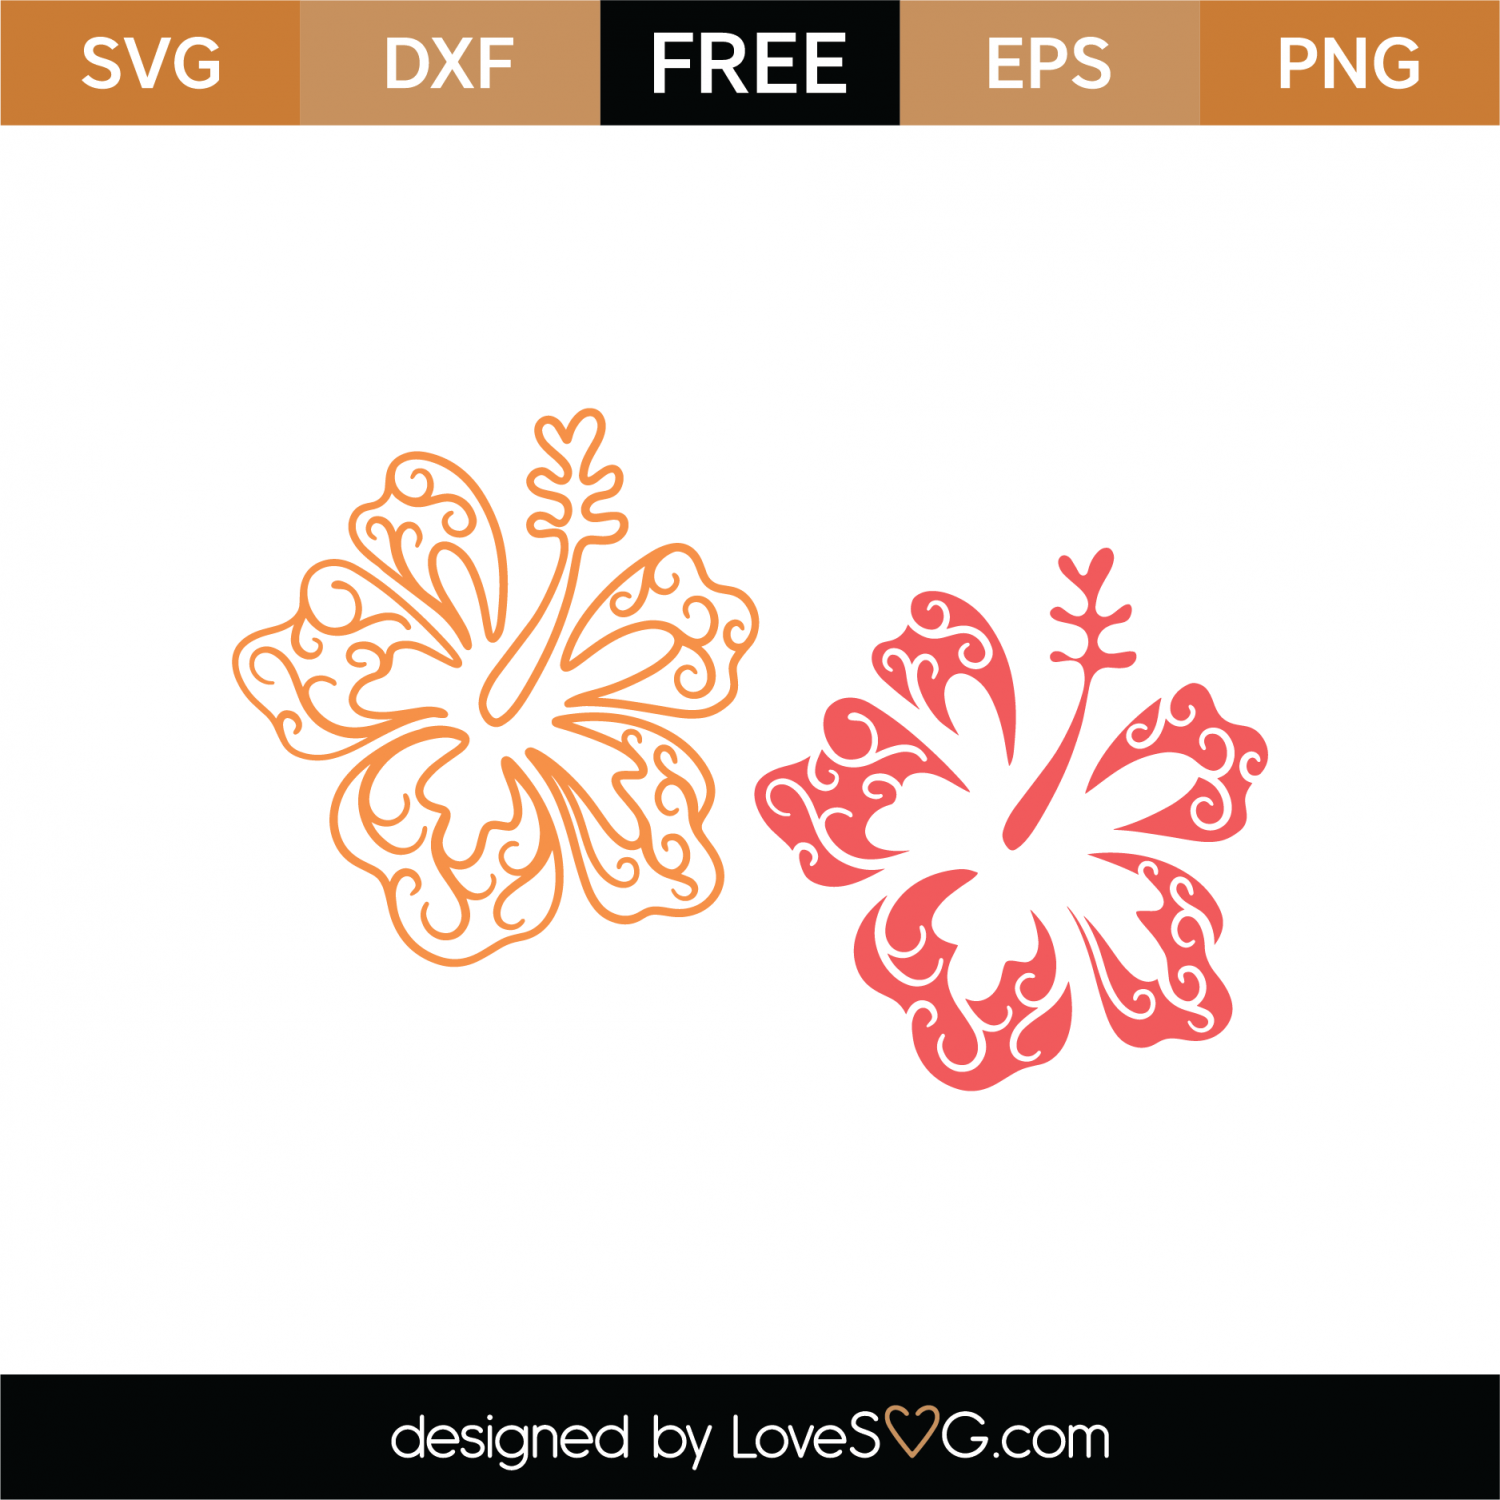 Download Free Tropical Flowers SVG Cut File | Lovesvg.com